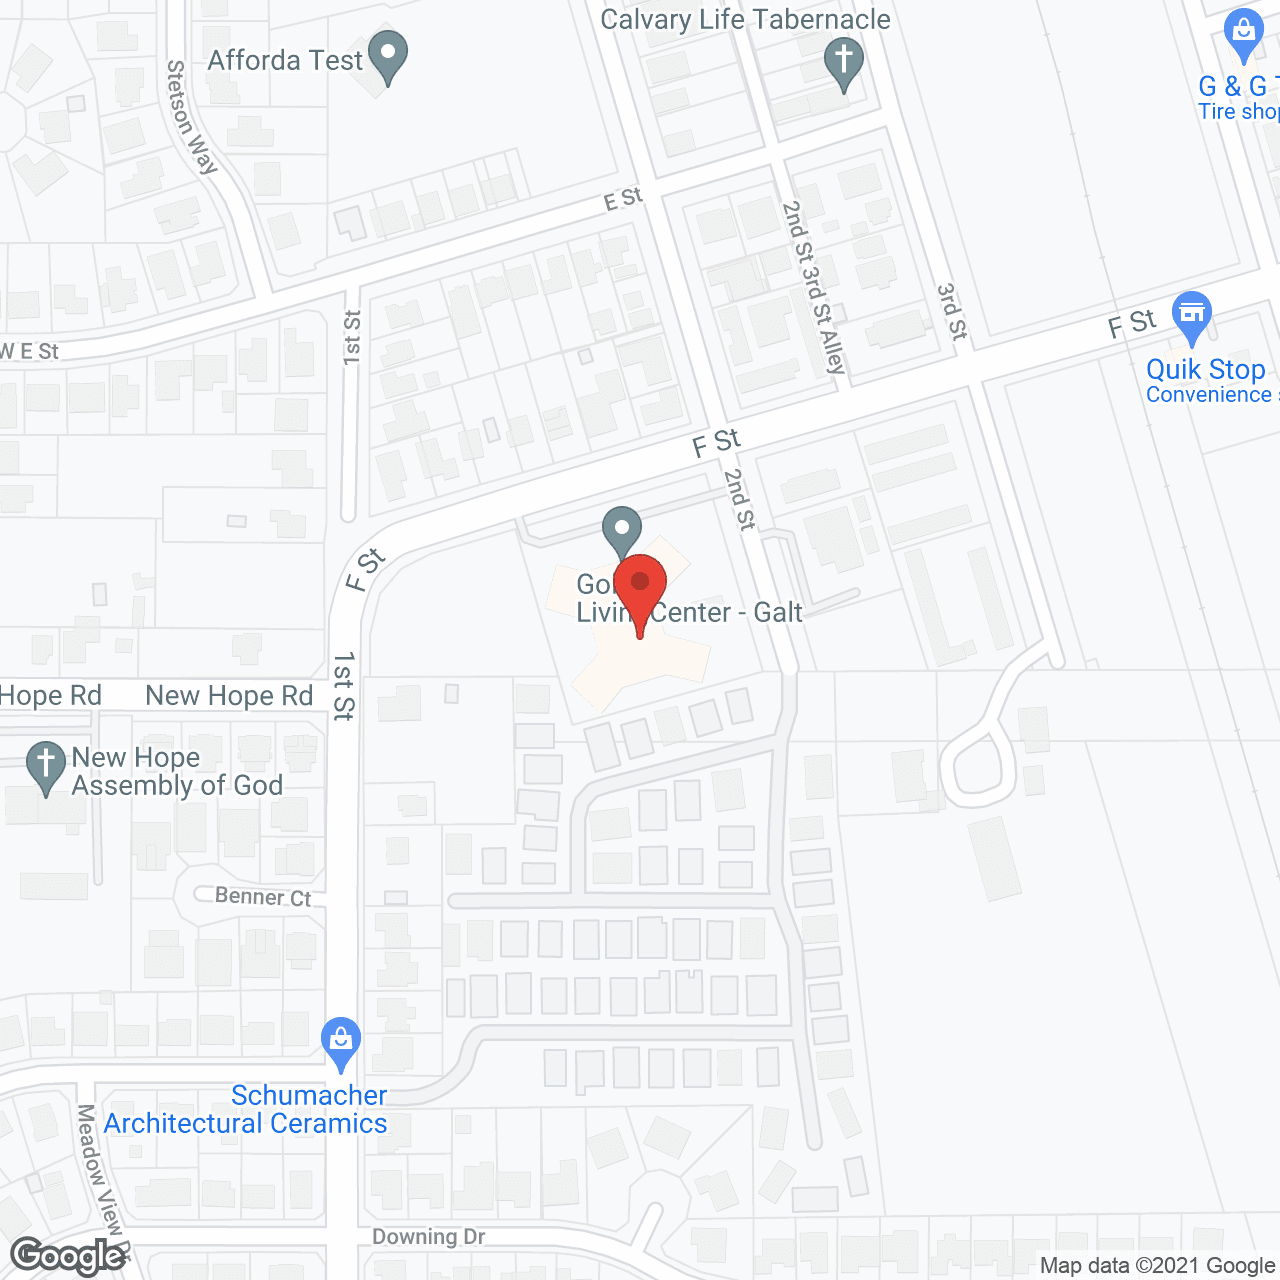 Golden LivingCenter – Galt in google map